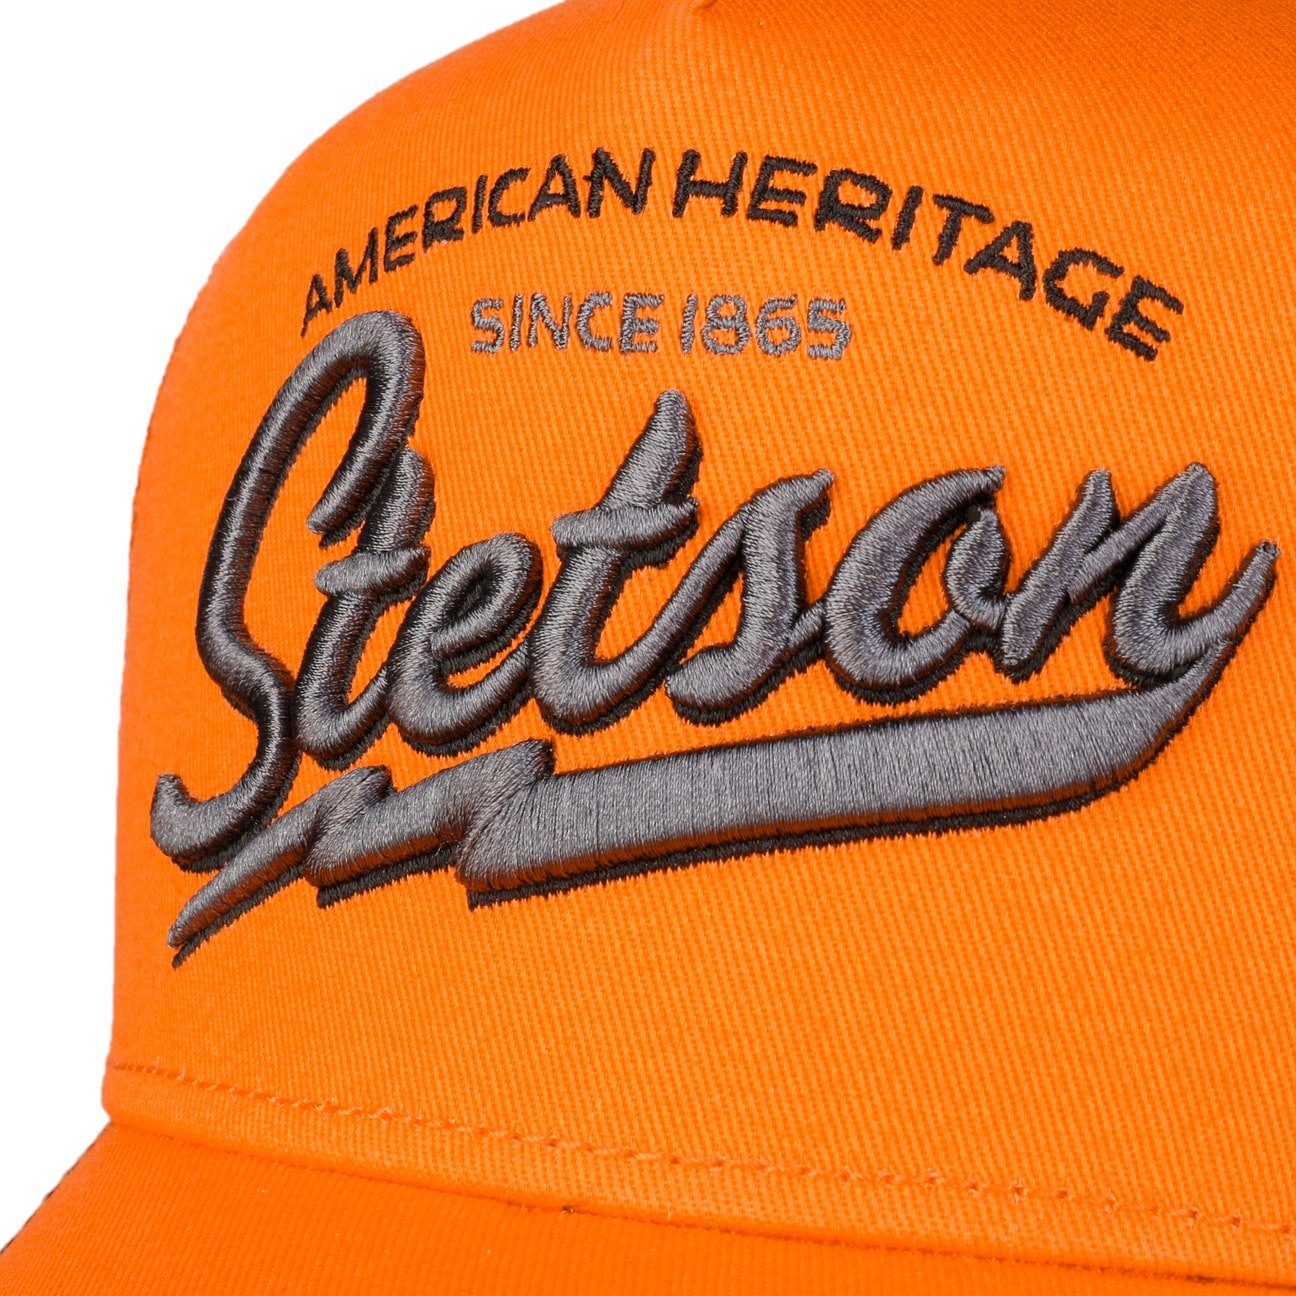 (1-St) orange Stetson Basecap Snapback Trucker Cap